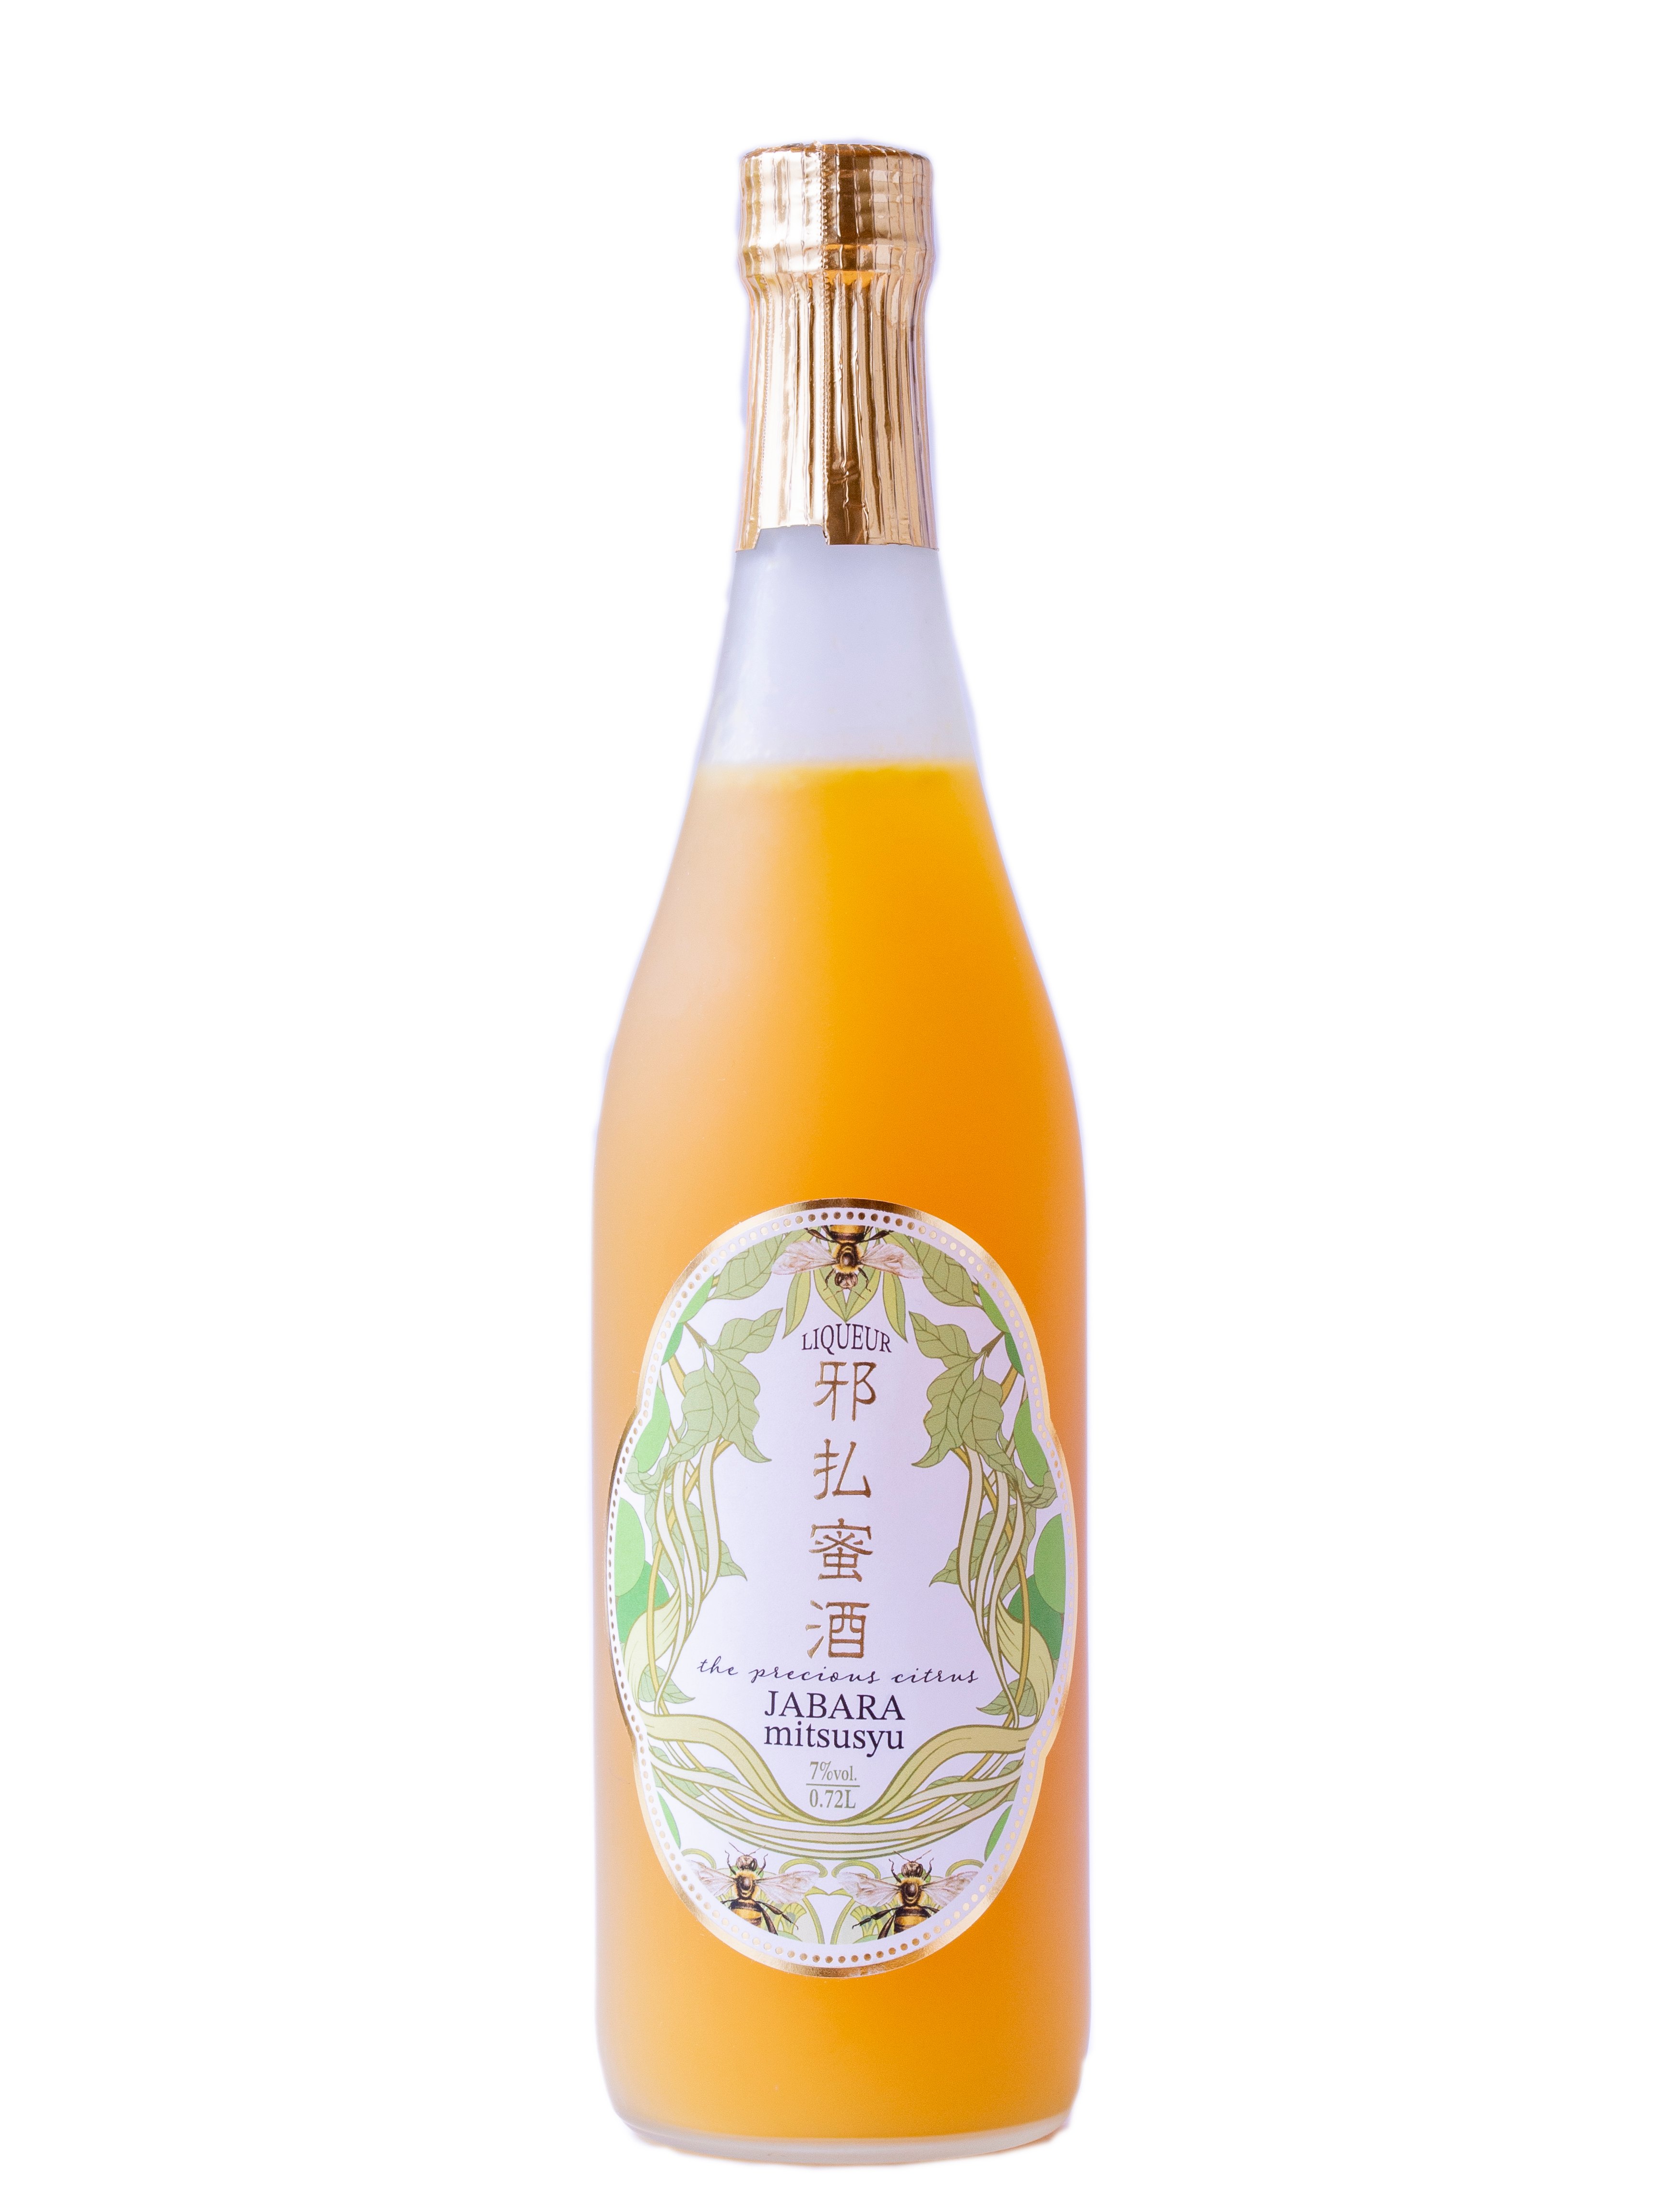 JABARA Citrusu Honey  Liqueur 720ml